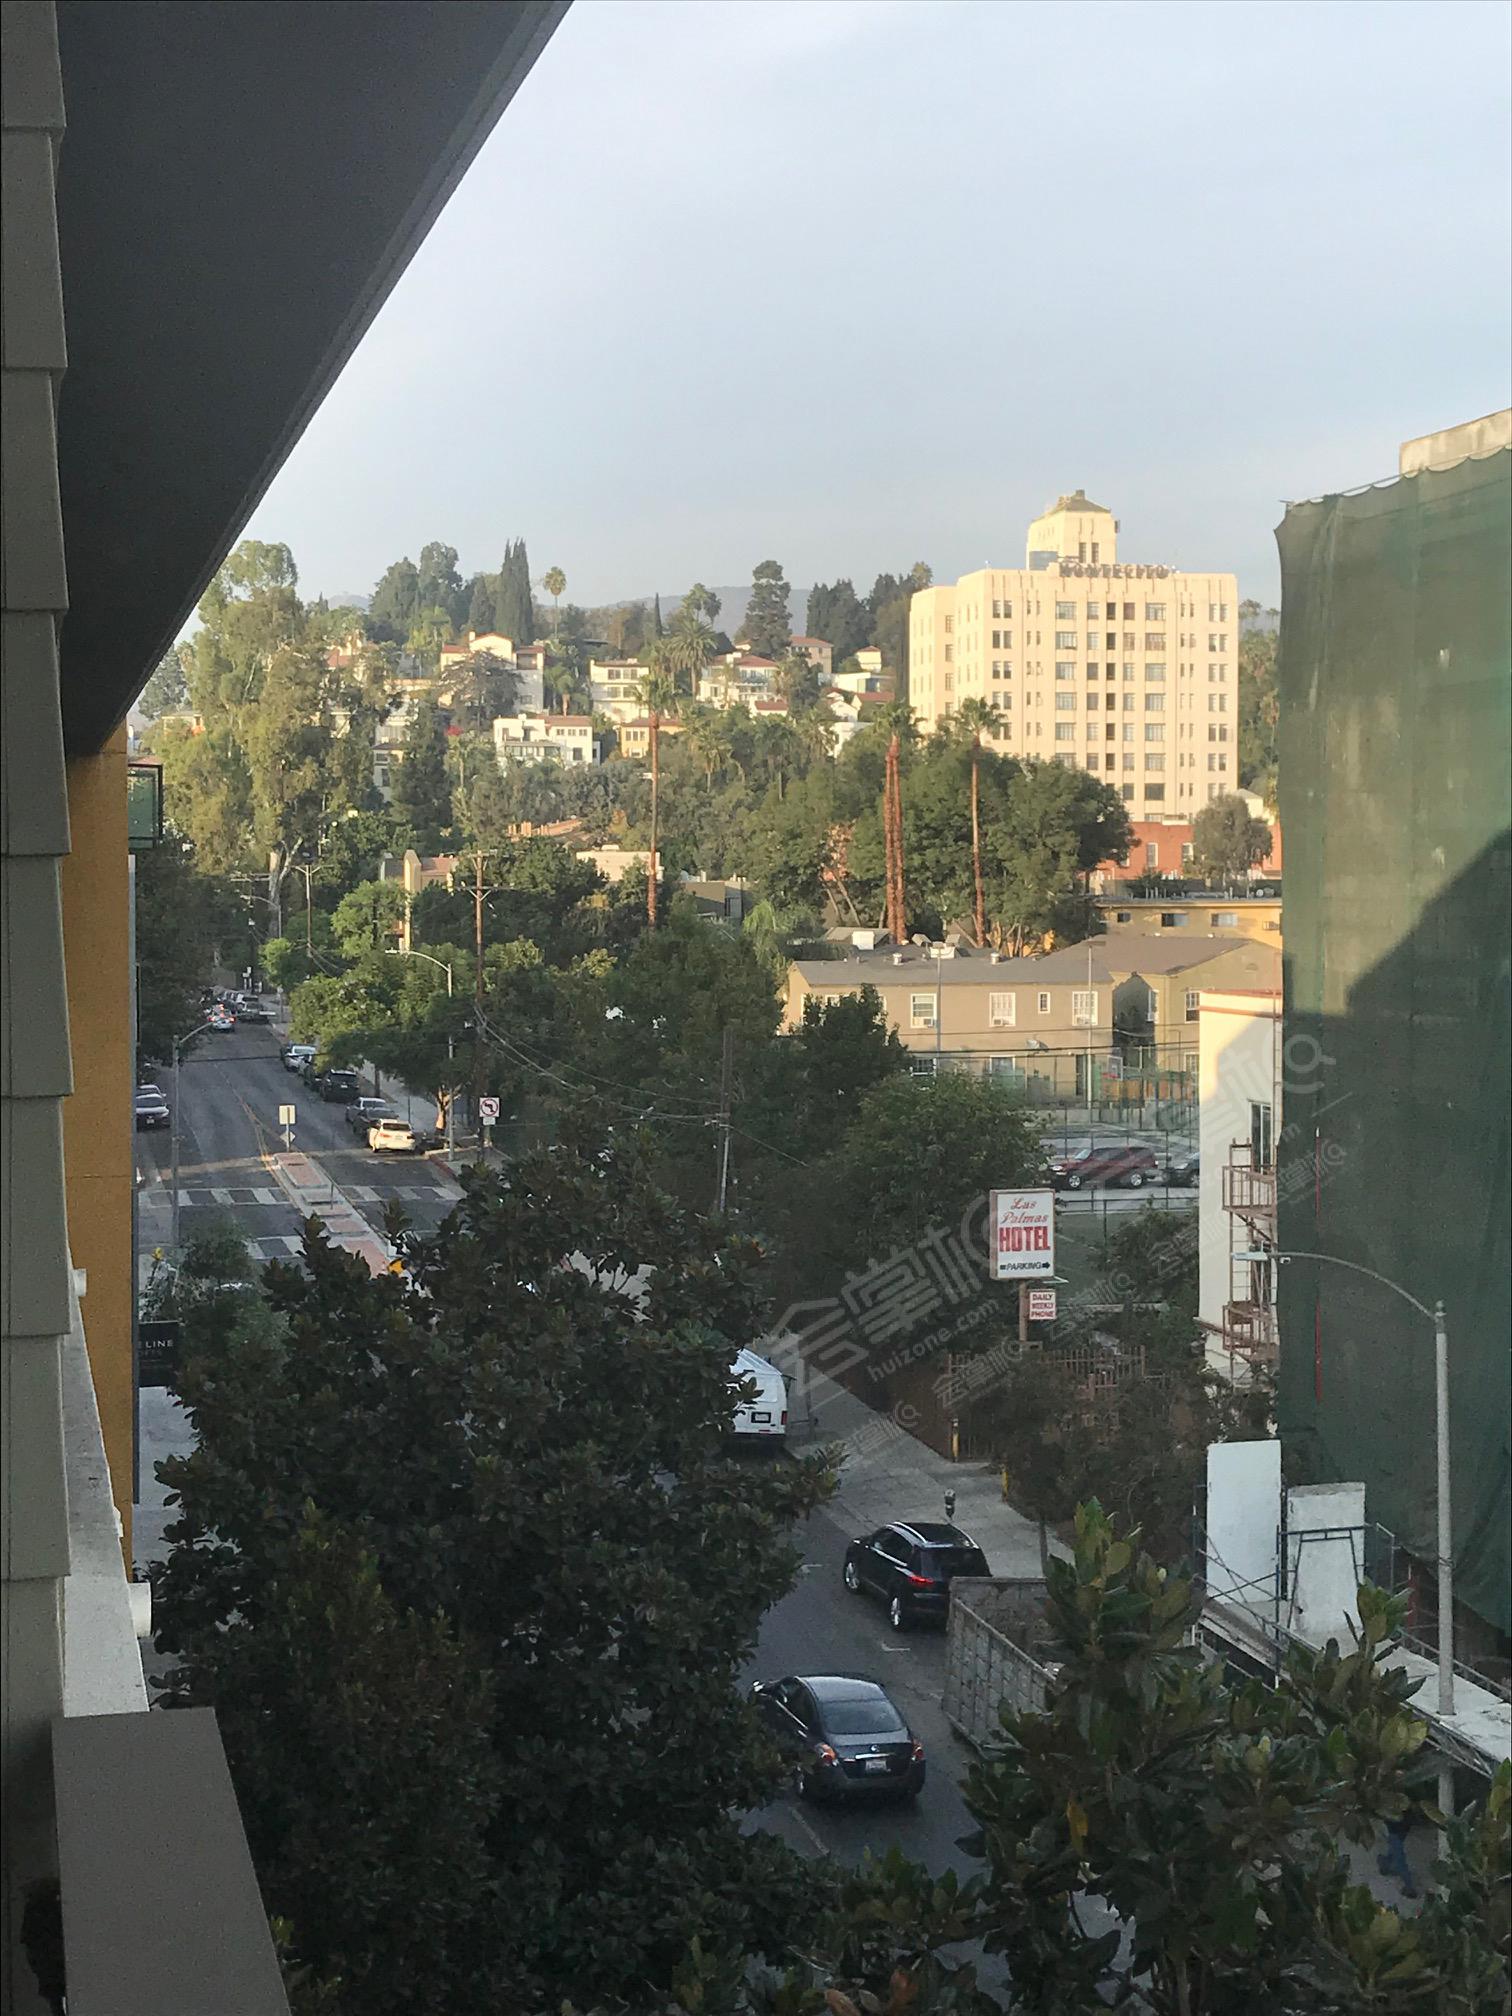 Two-story Penthouse Loft Overlooking LA